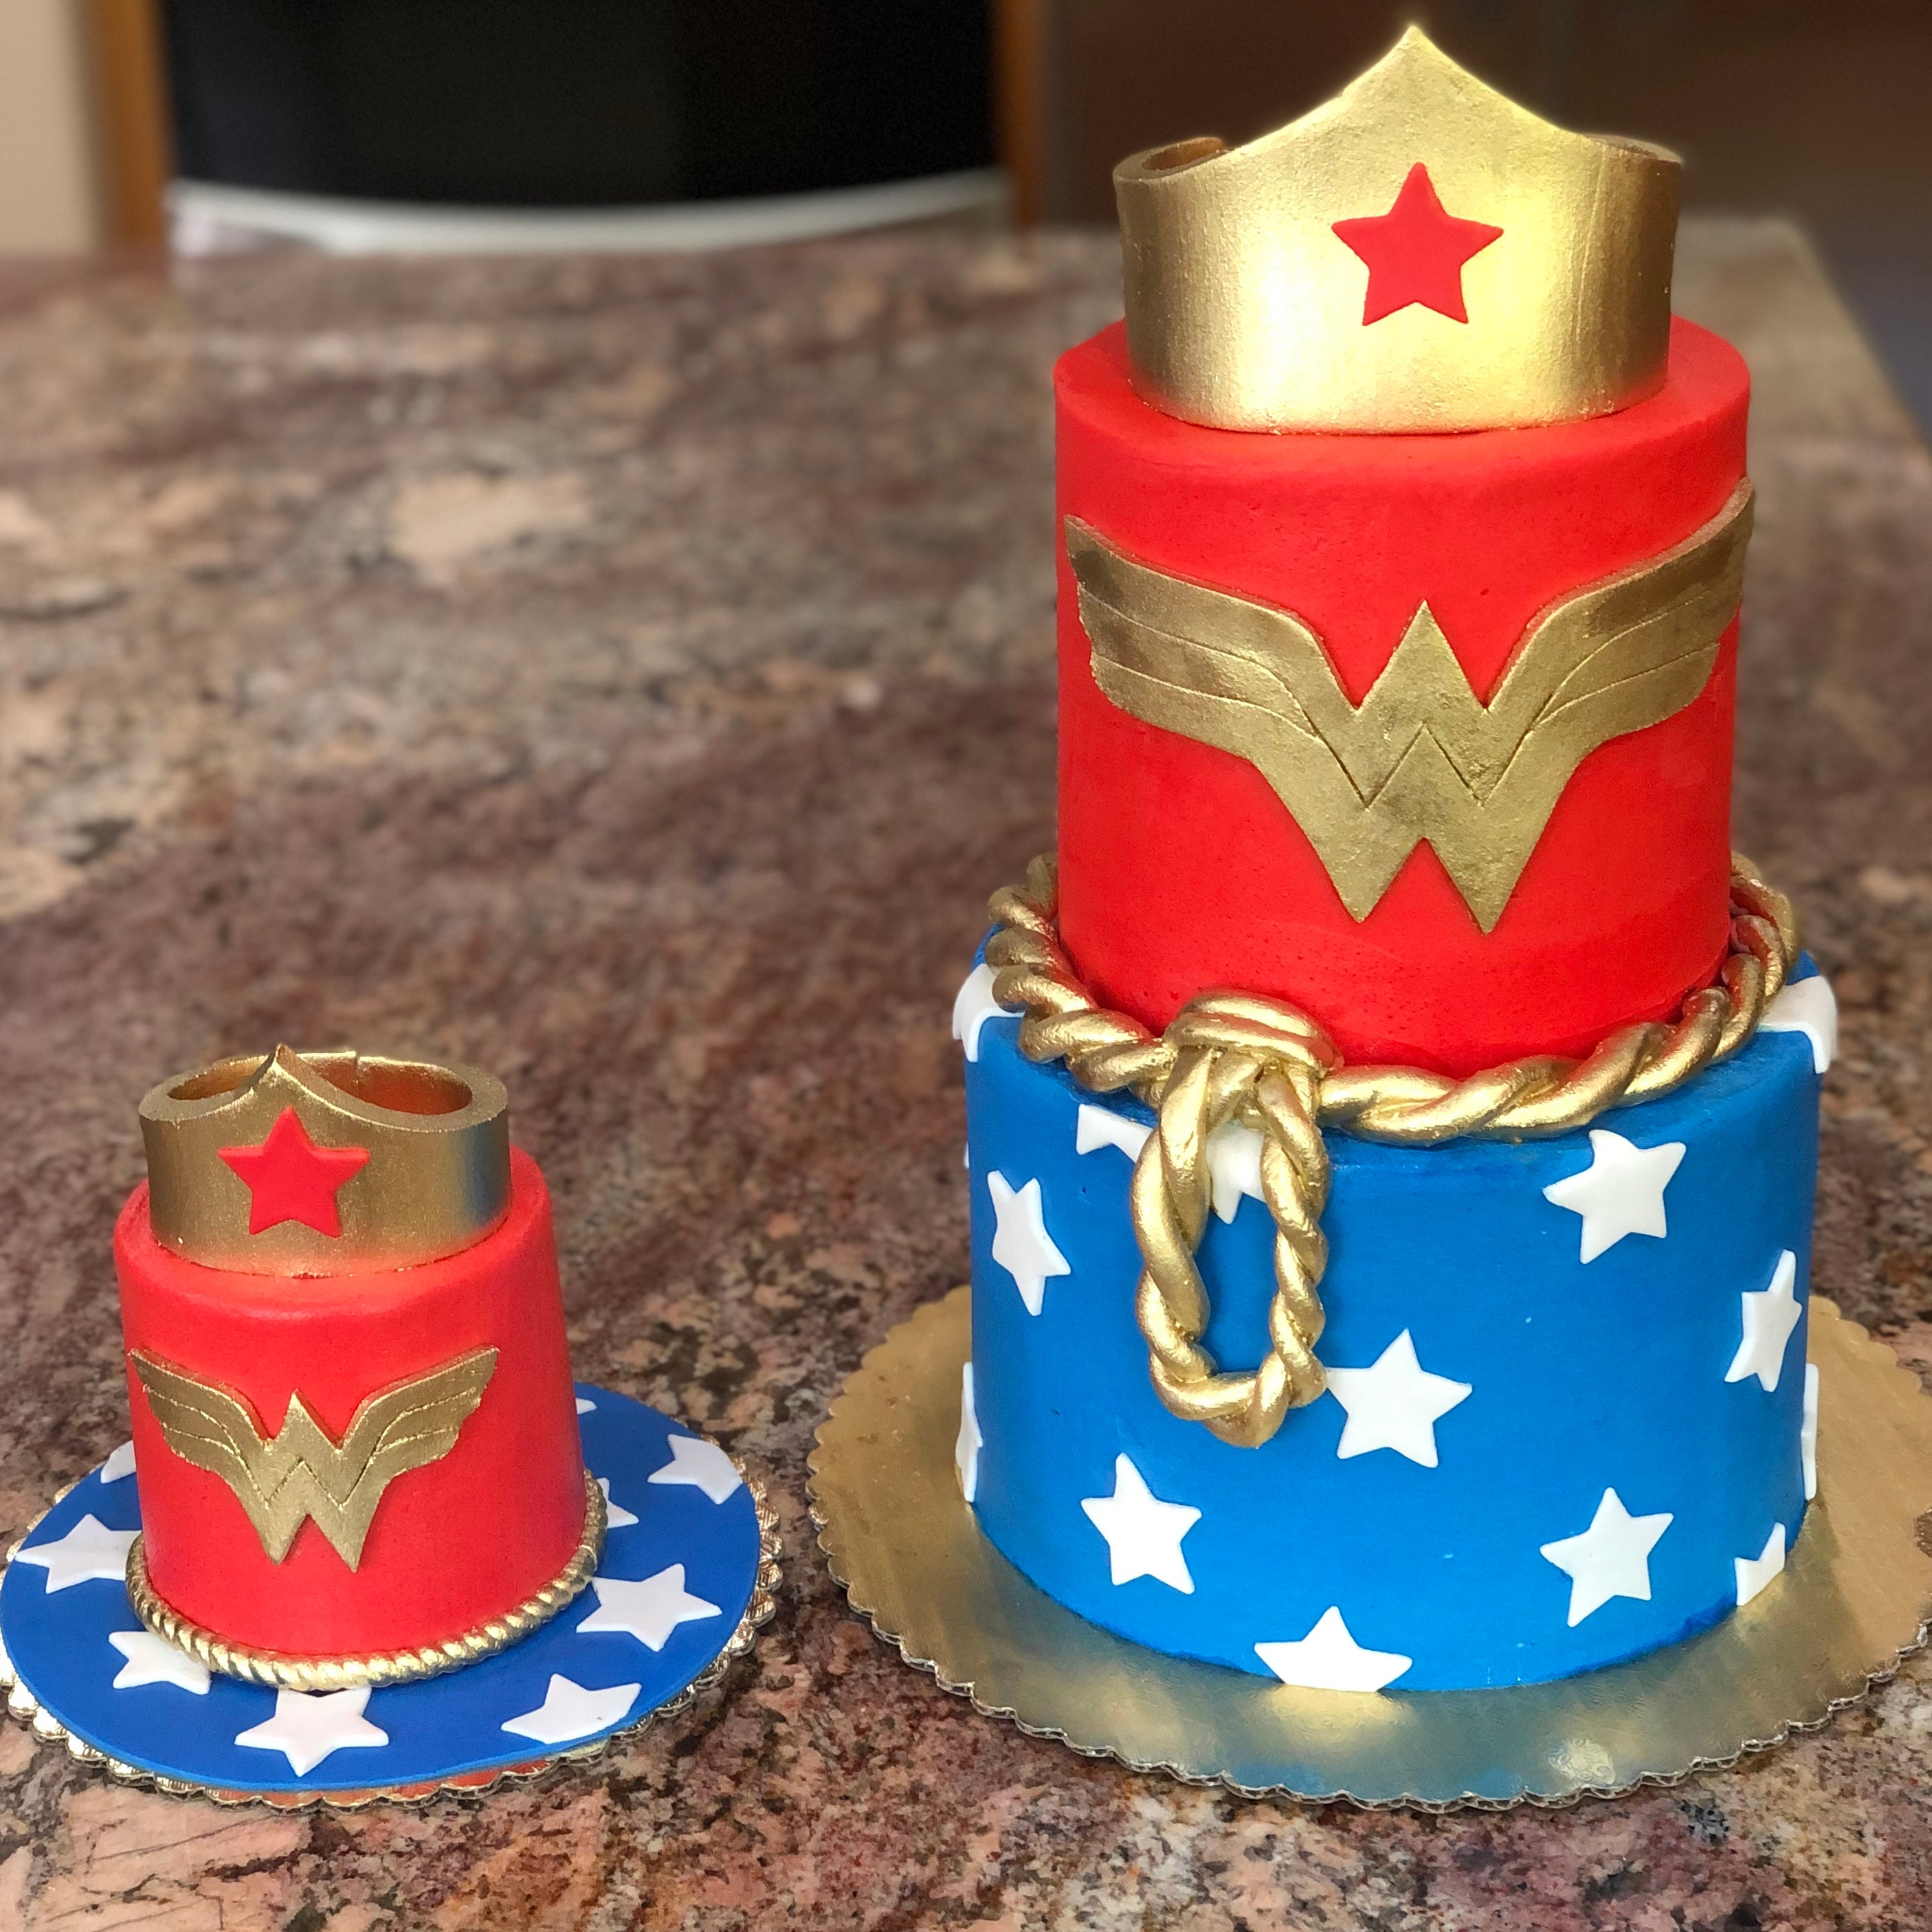 Sugar and Paper Events - Wonder Woman cake for a little superhero! # wonderwoman #thefutureisfemale #girlpower #woodinvillebakery  #seattlecustomcakes #buttercream | Facebook